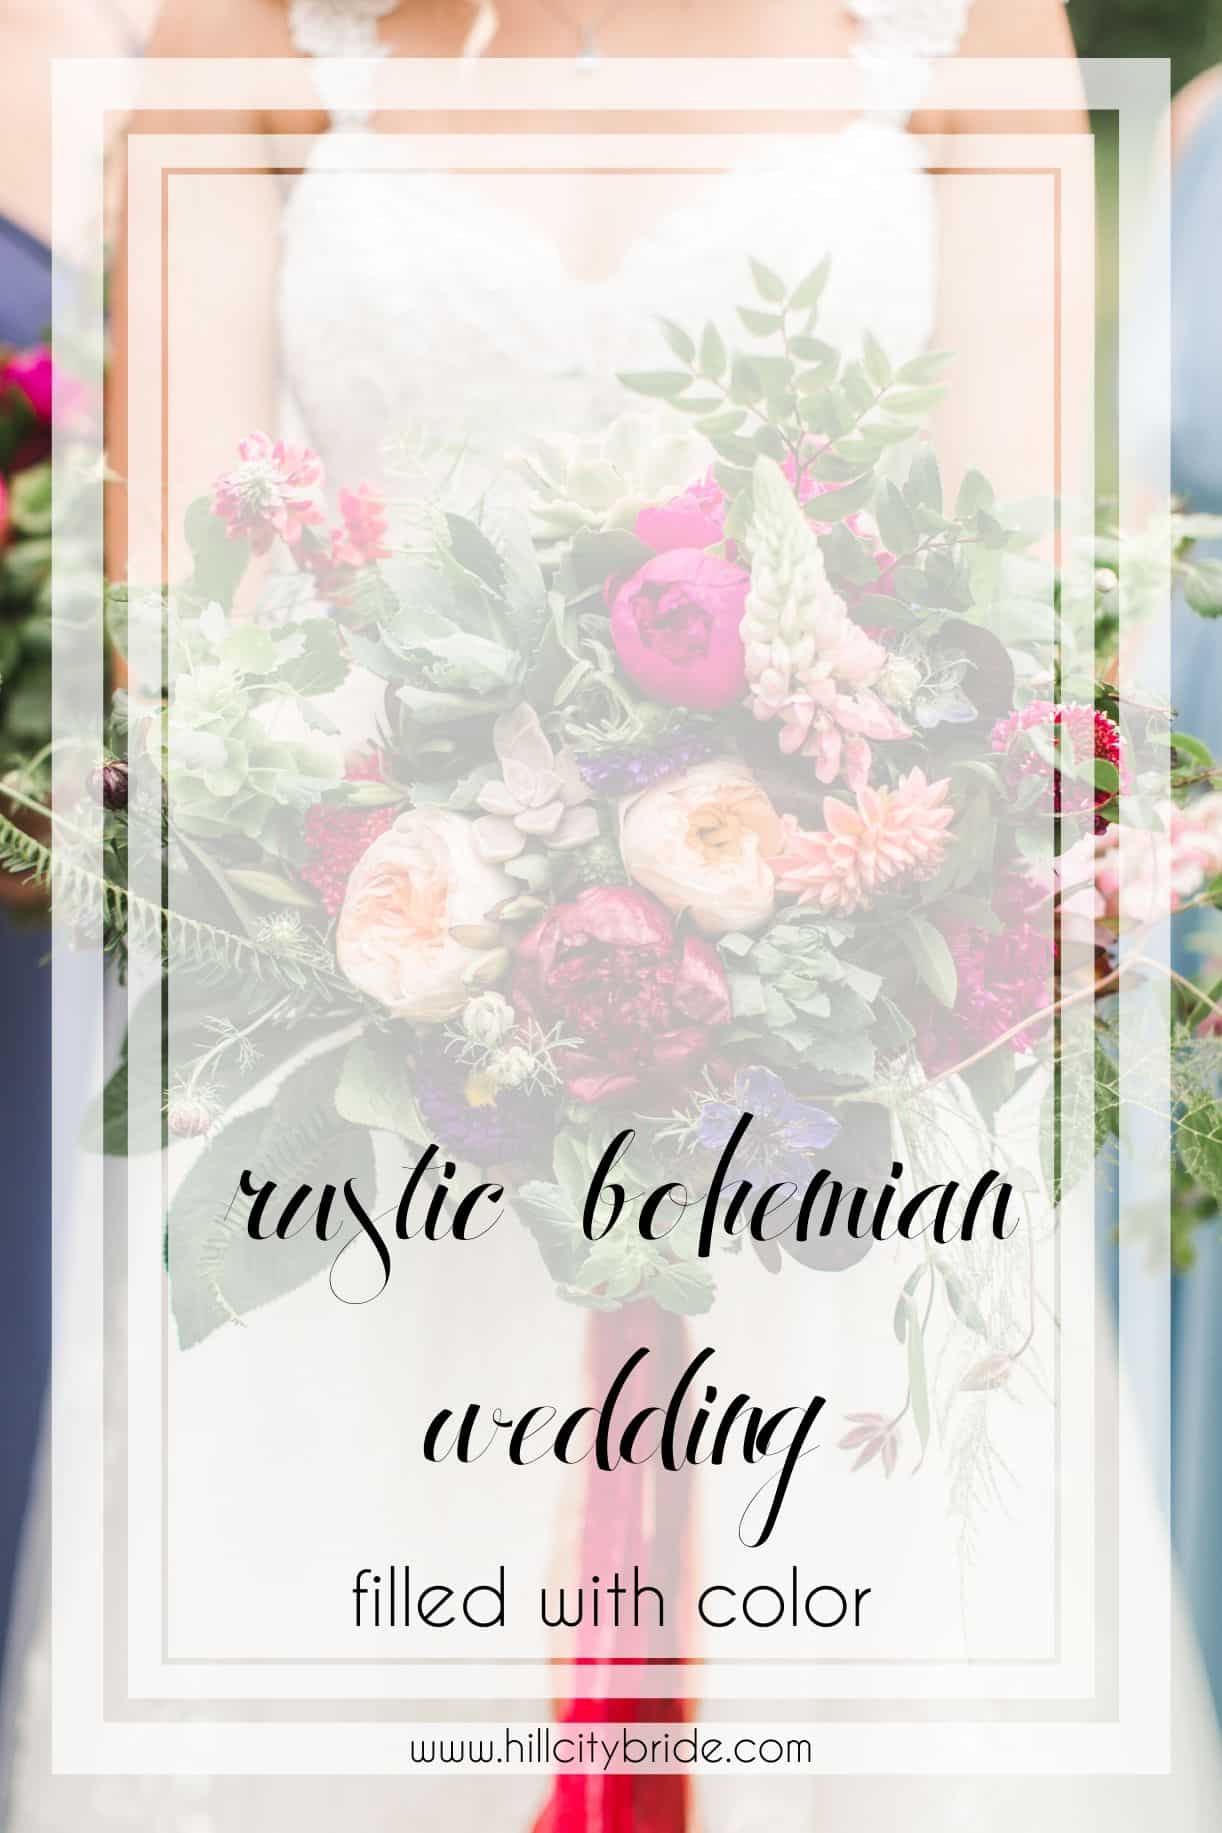 Colorful Rustic Bohemian Wedding Theme | Hill City Bride Virginia Weddings Blog